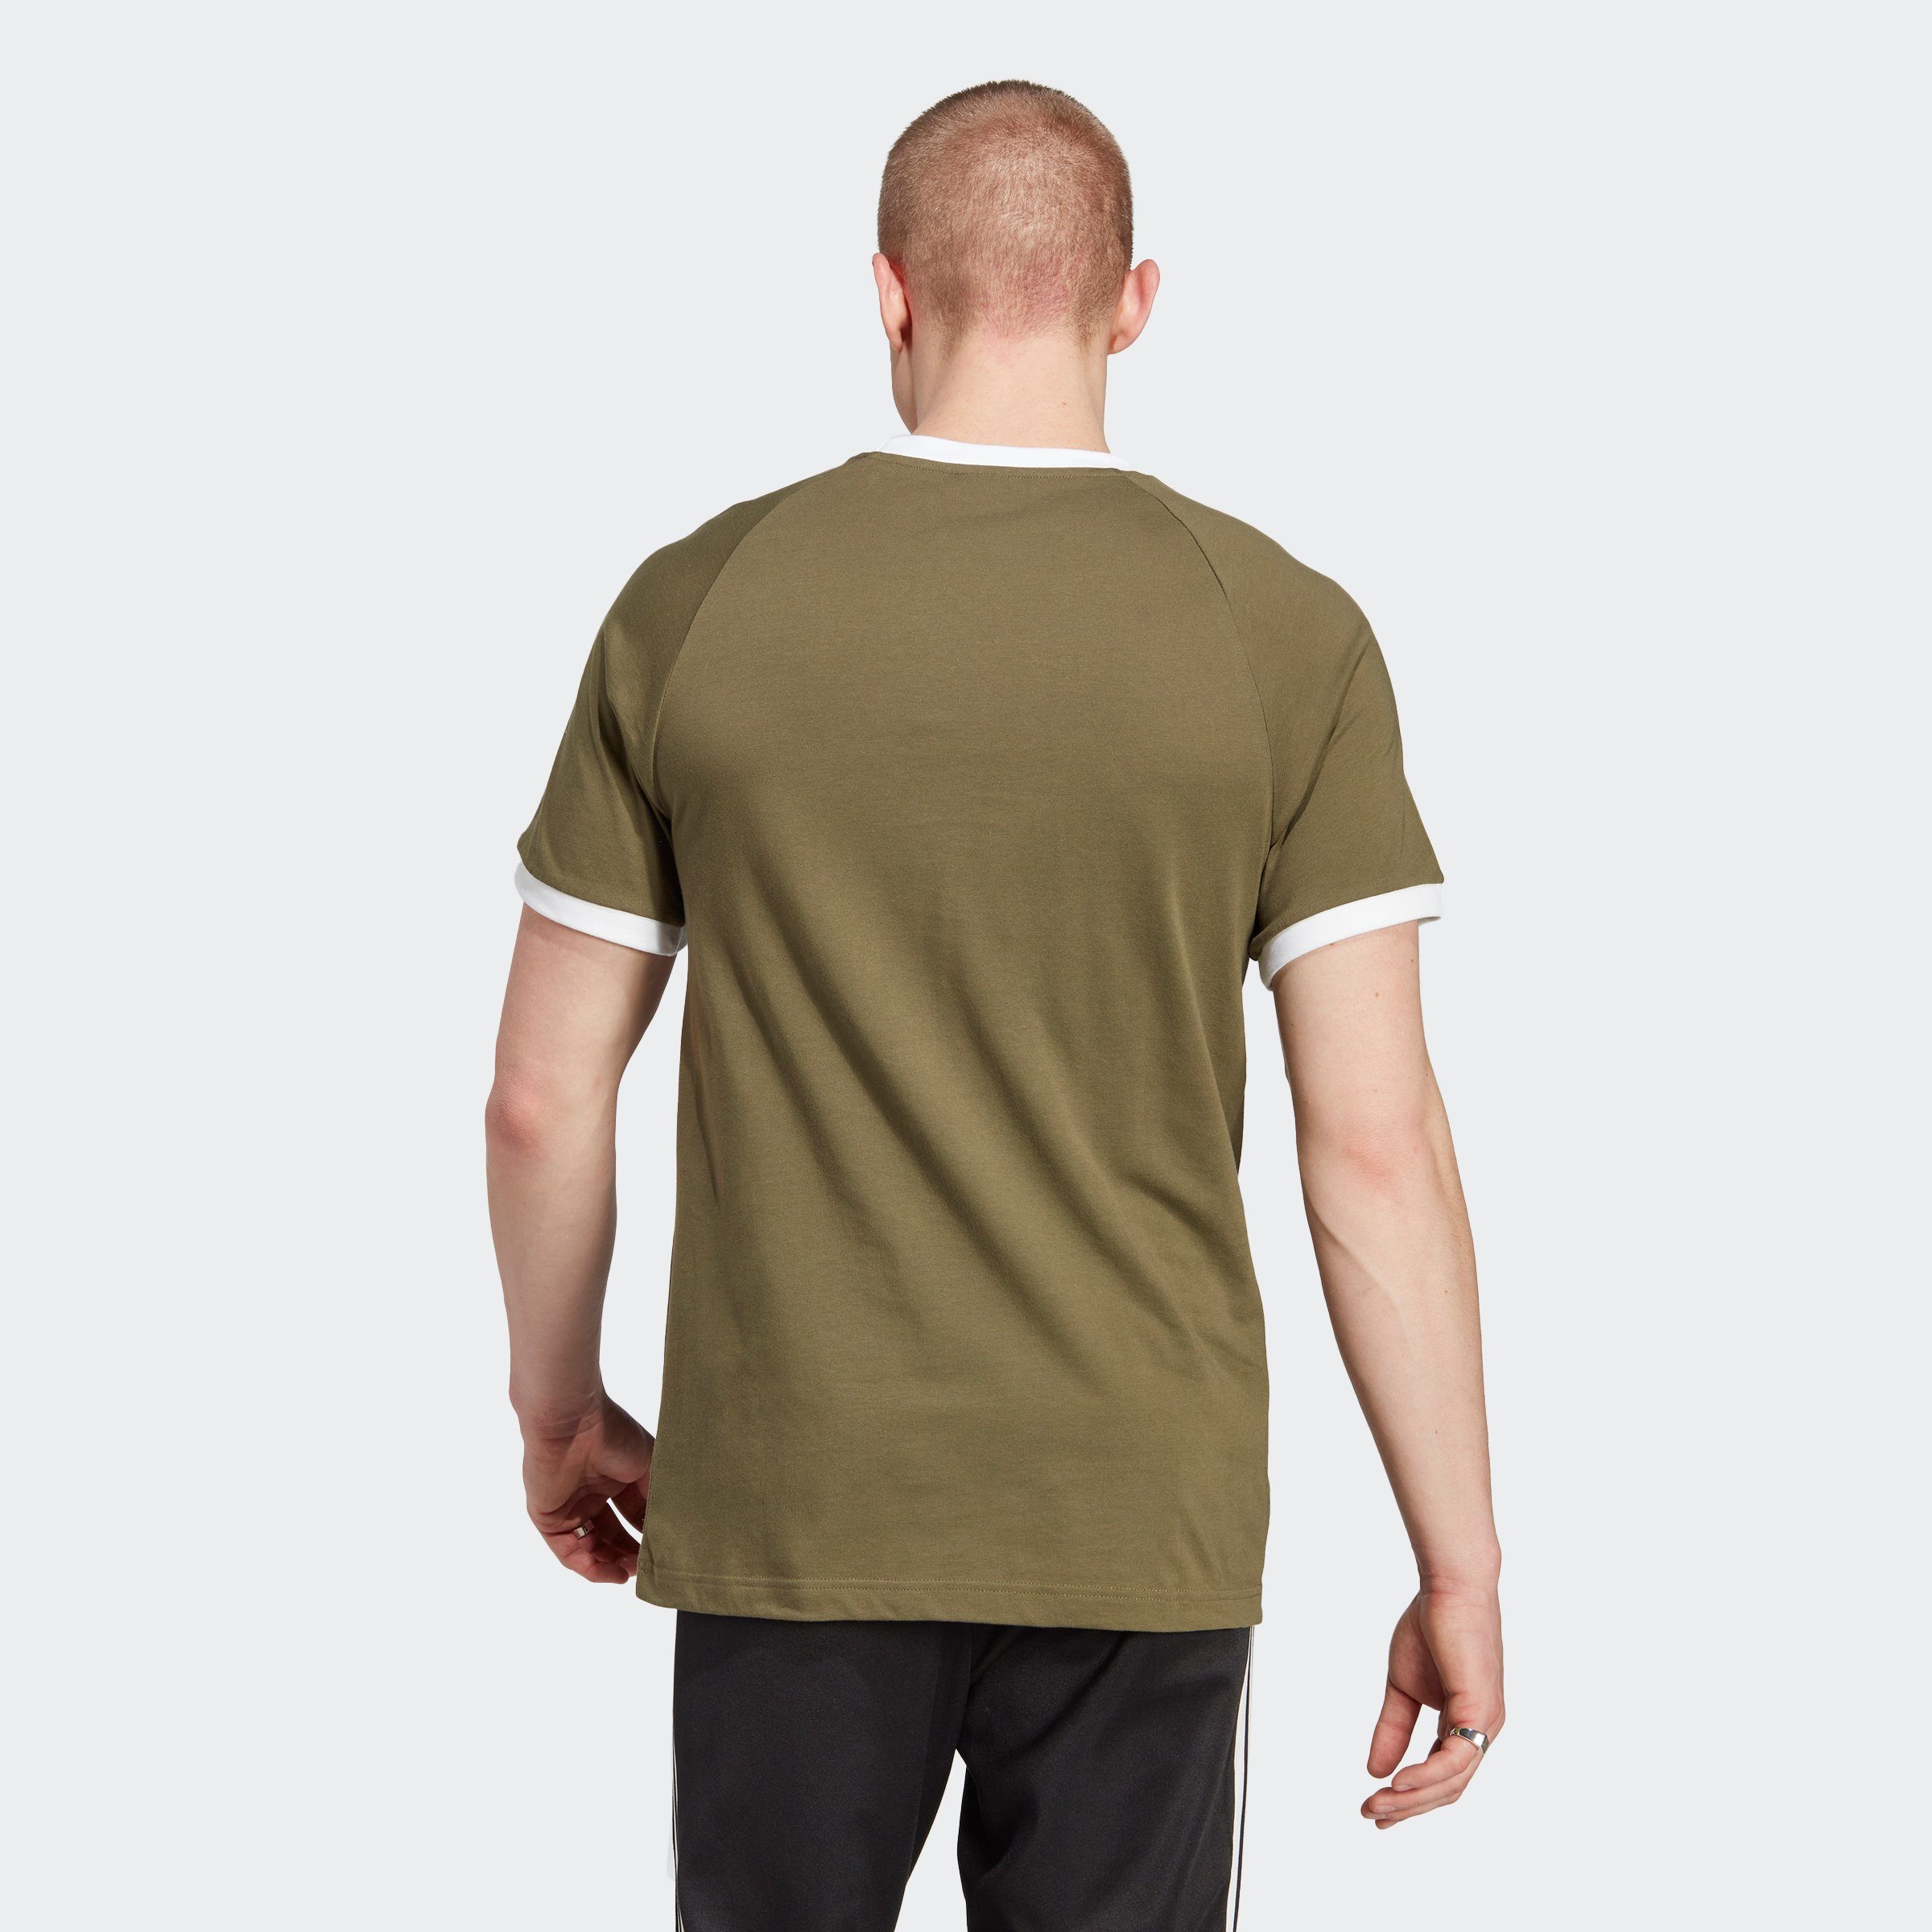 TEE Originals Strata Olive 3-STRIPES T-Shirt adidas